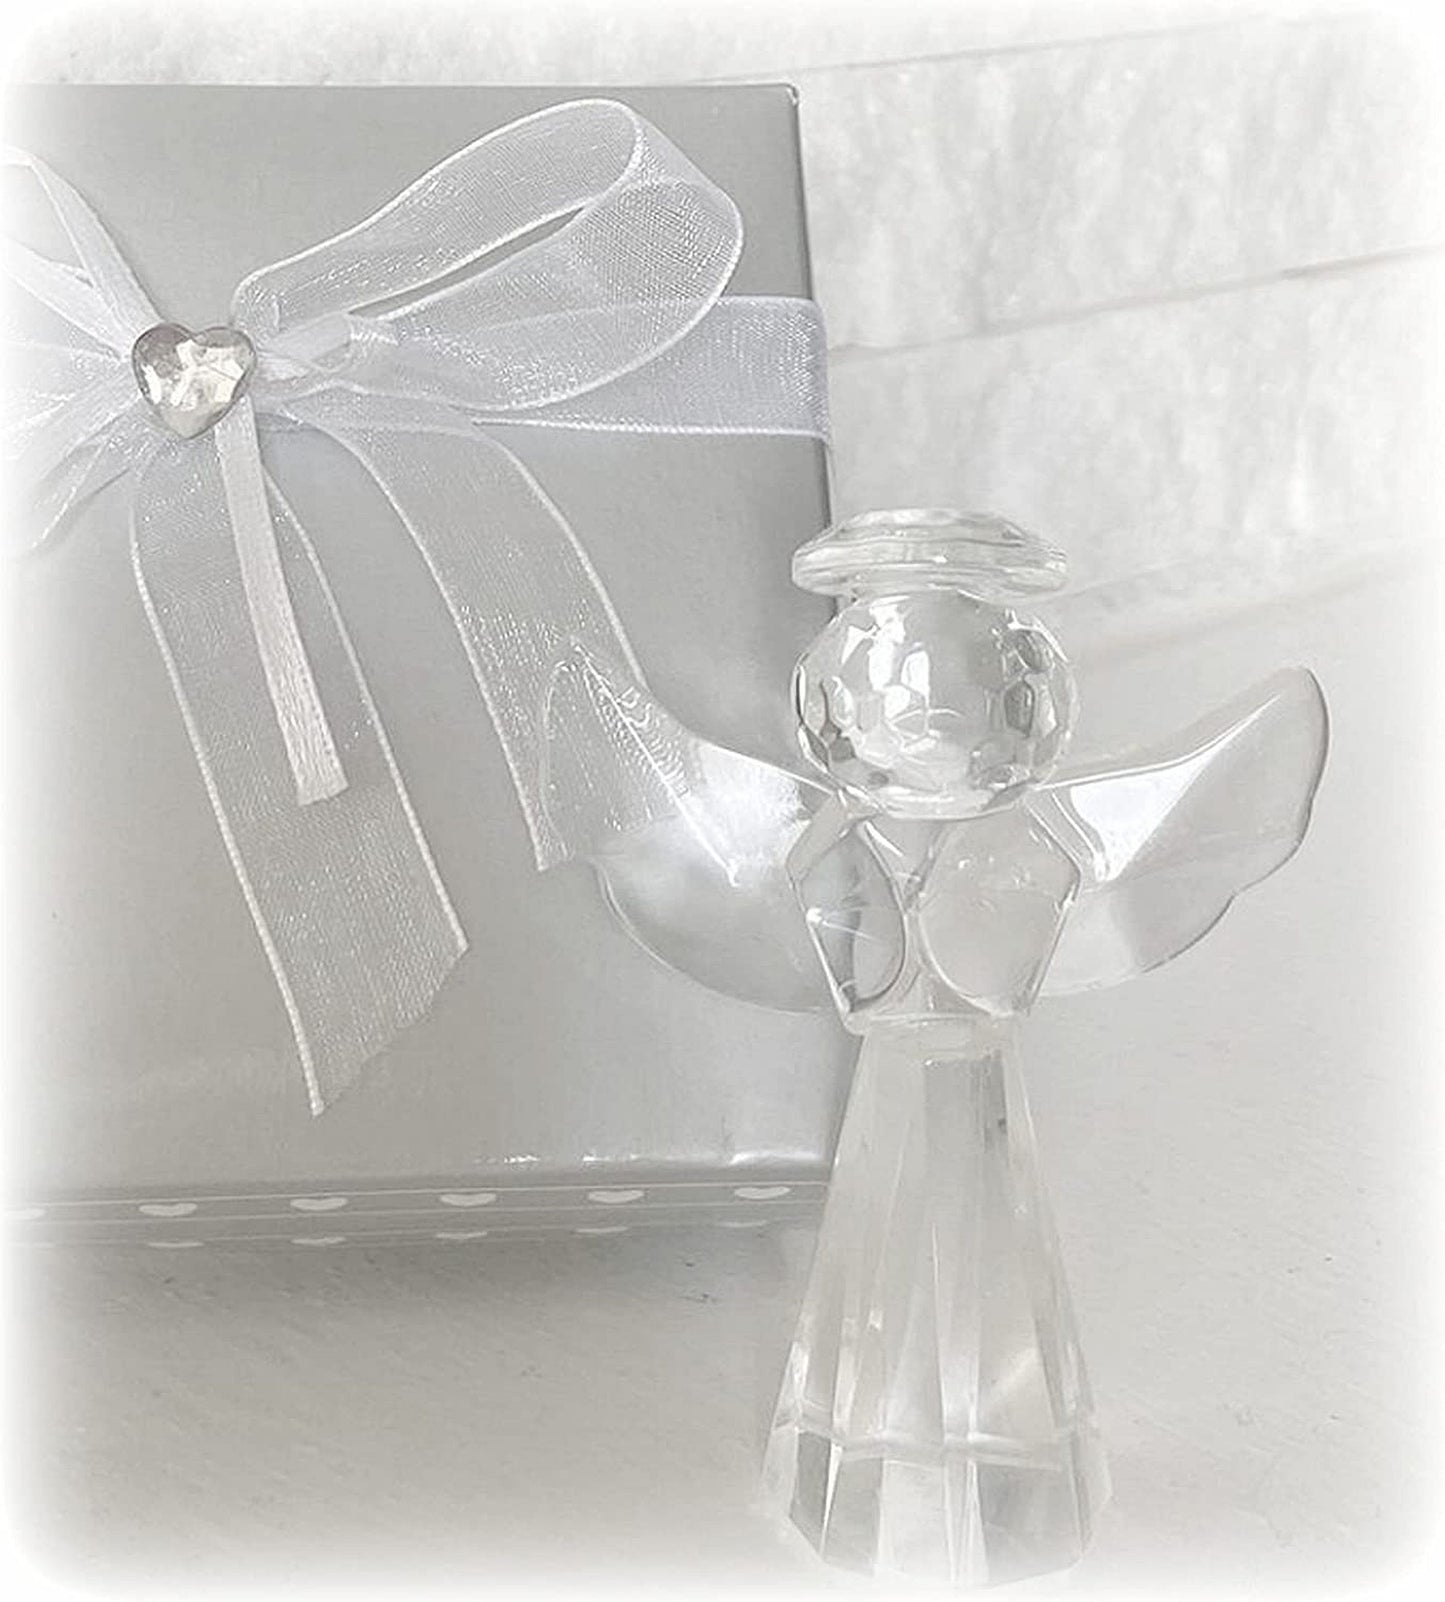 Crystal Angel Statue Sympathy Gift with Condolences Card